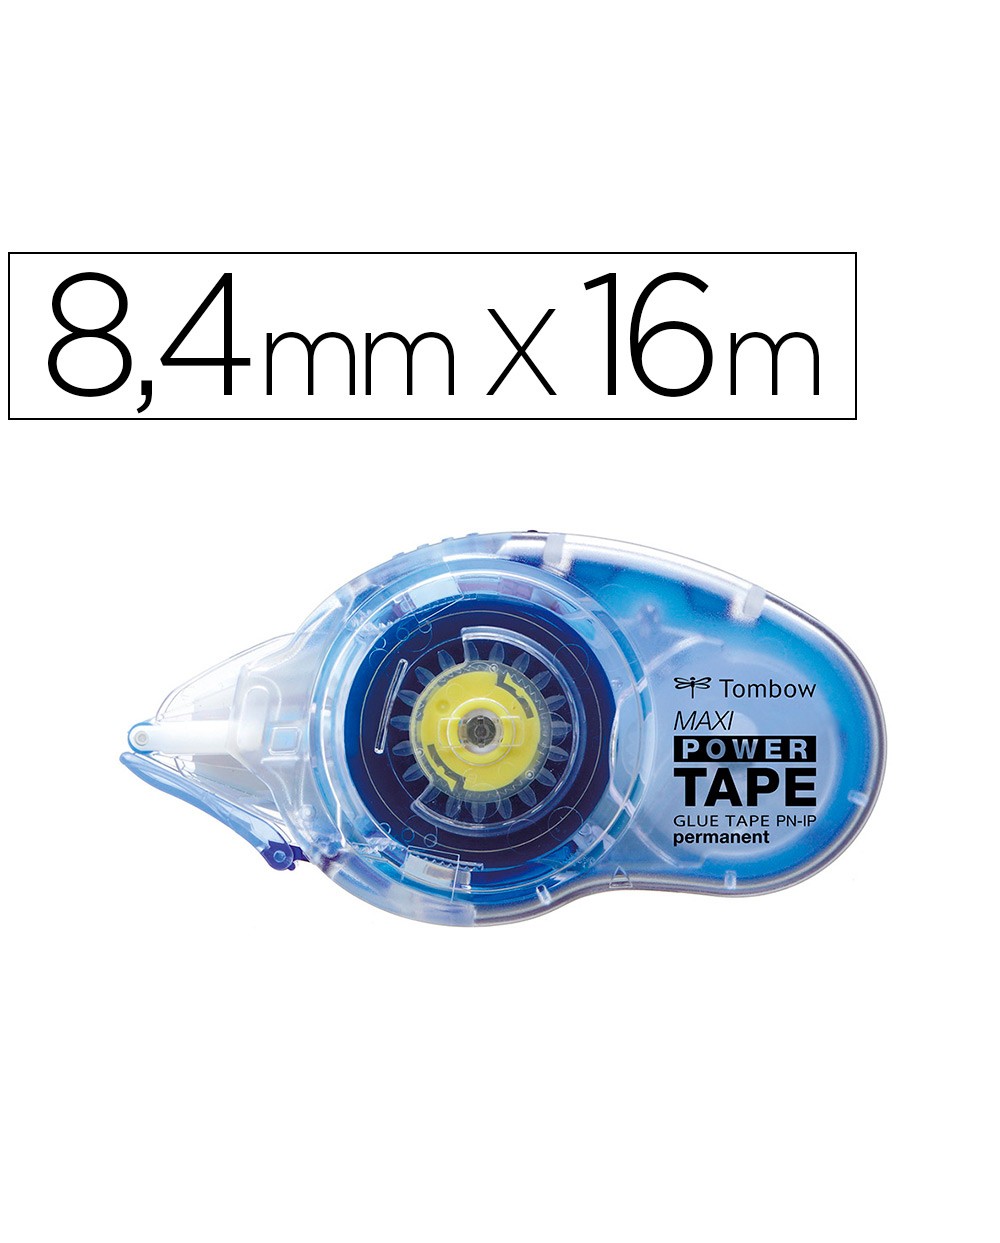 Cinta adhesiva tombow maxi power tape permanente 84 mm x 16 m